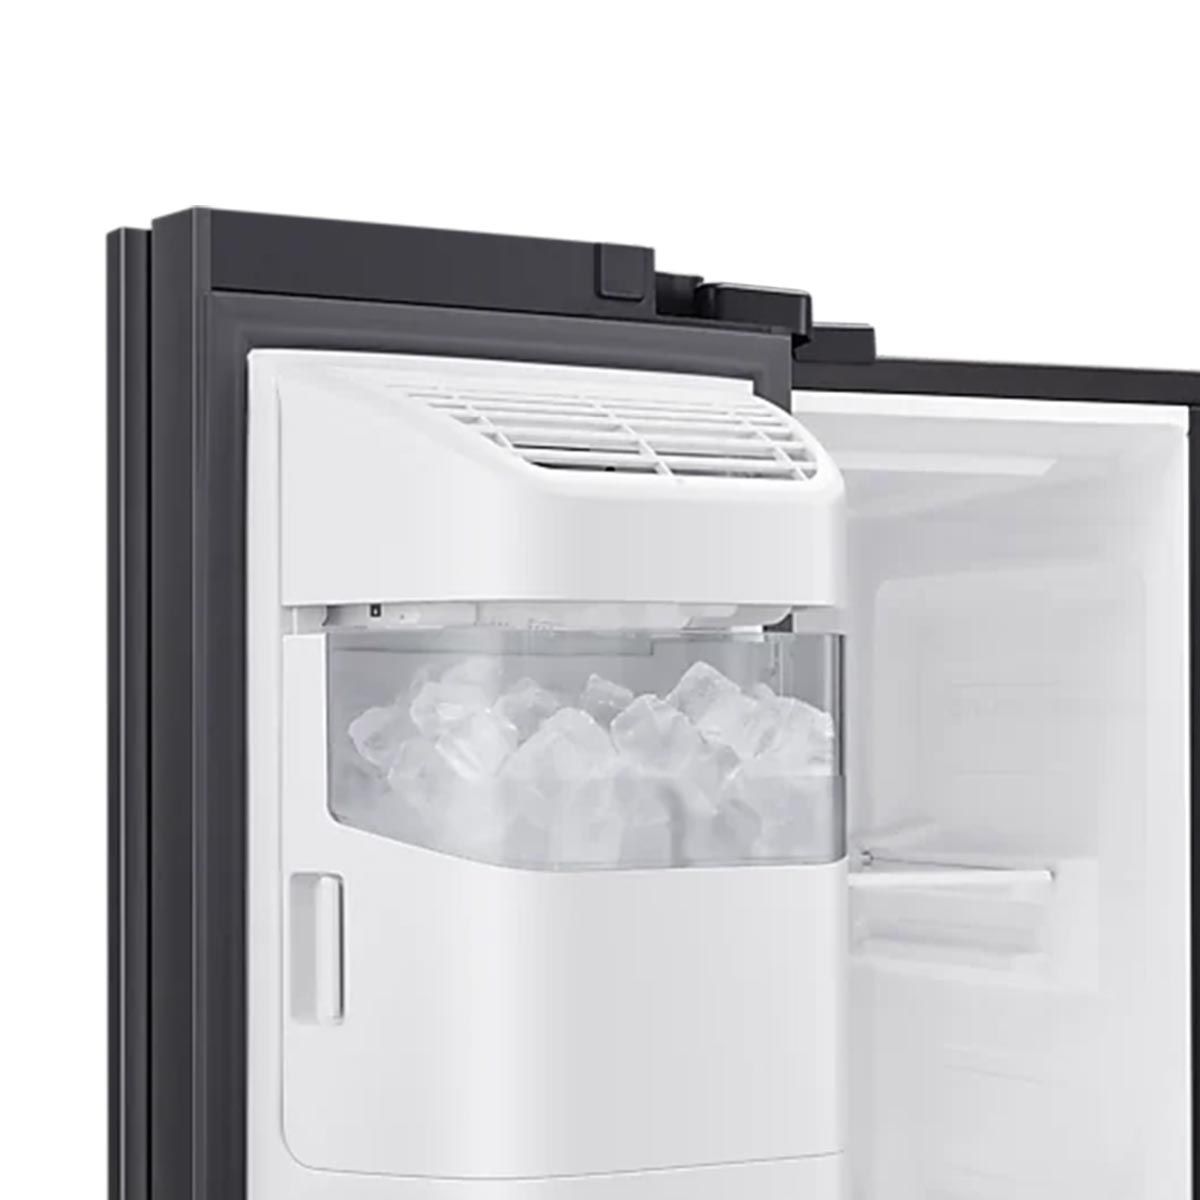 SAMSUNG ตู้เย็น Side by Side 22.1 Q Auto Ice สีขาว รุ่น RH64A53F115/ST